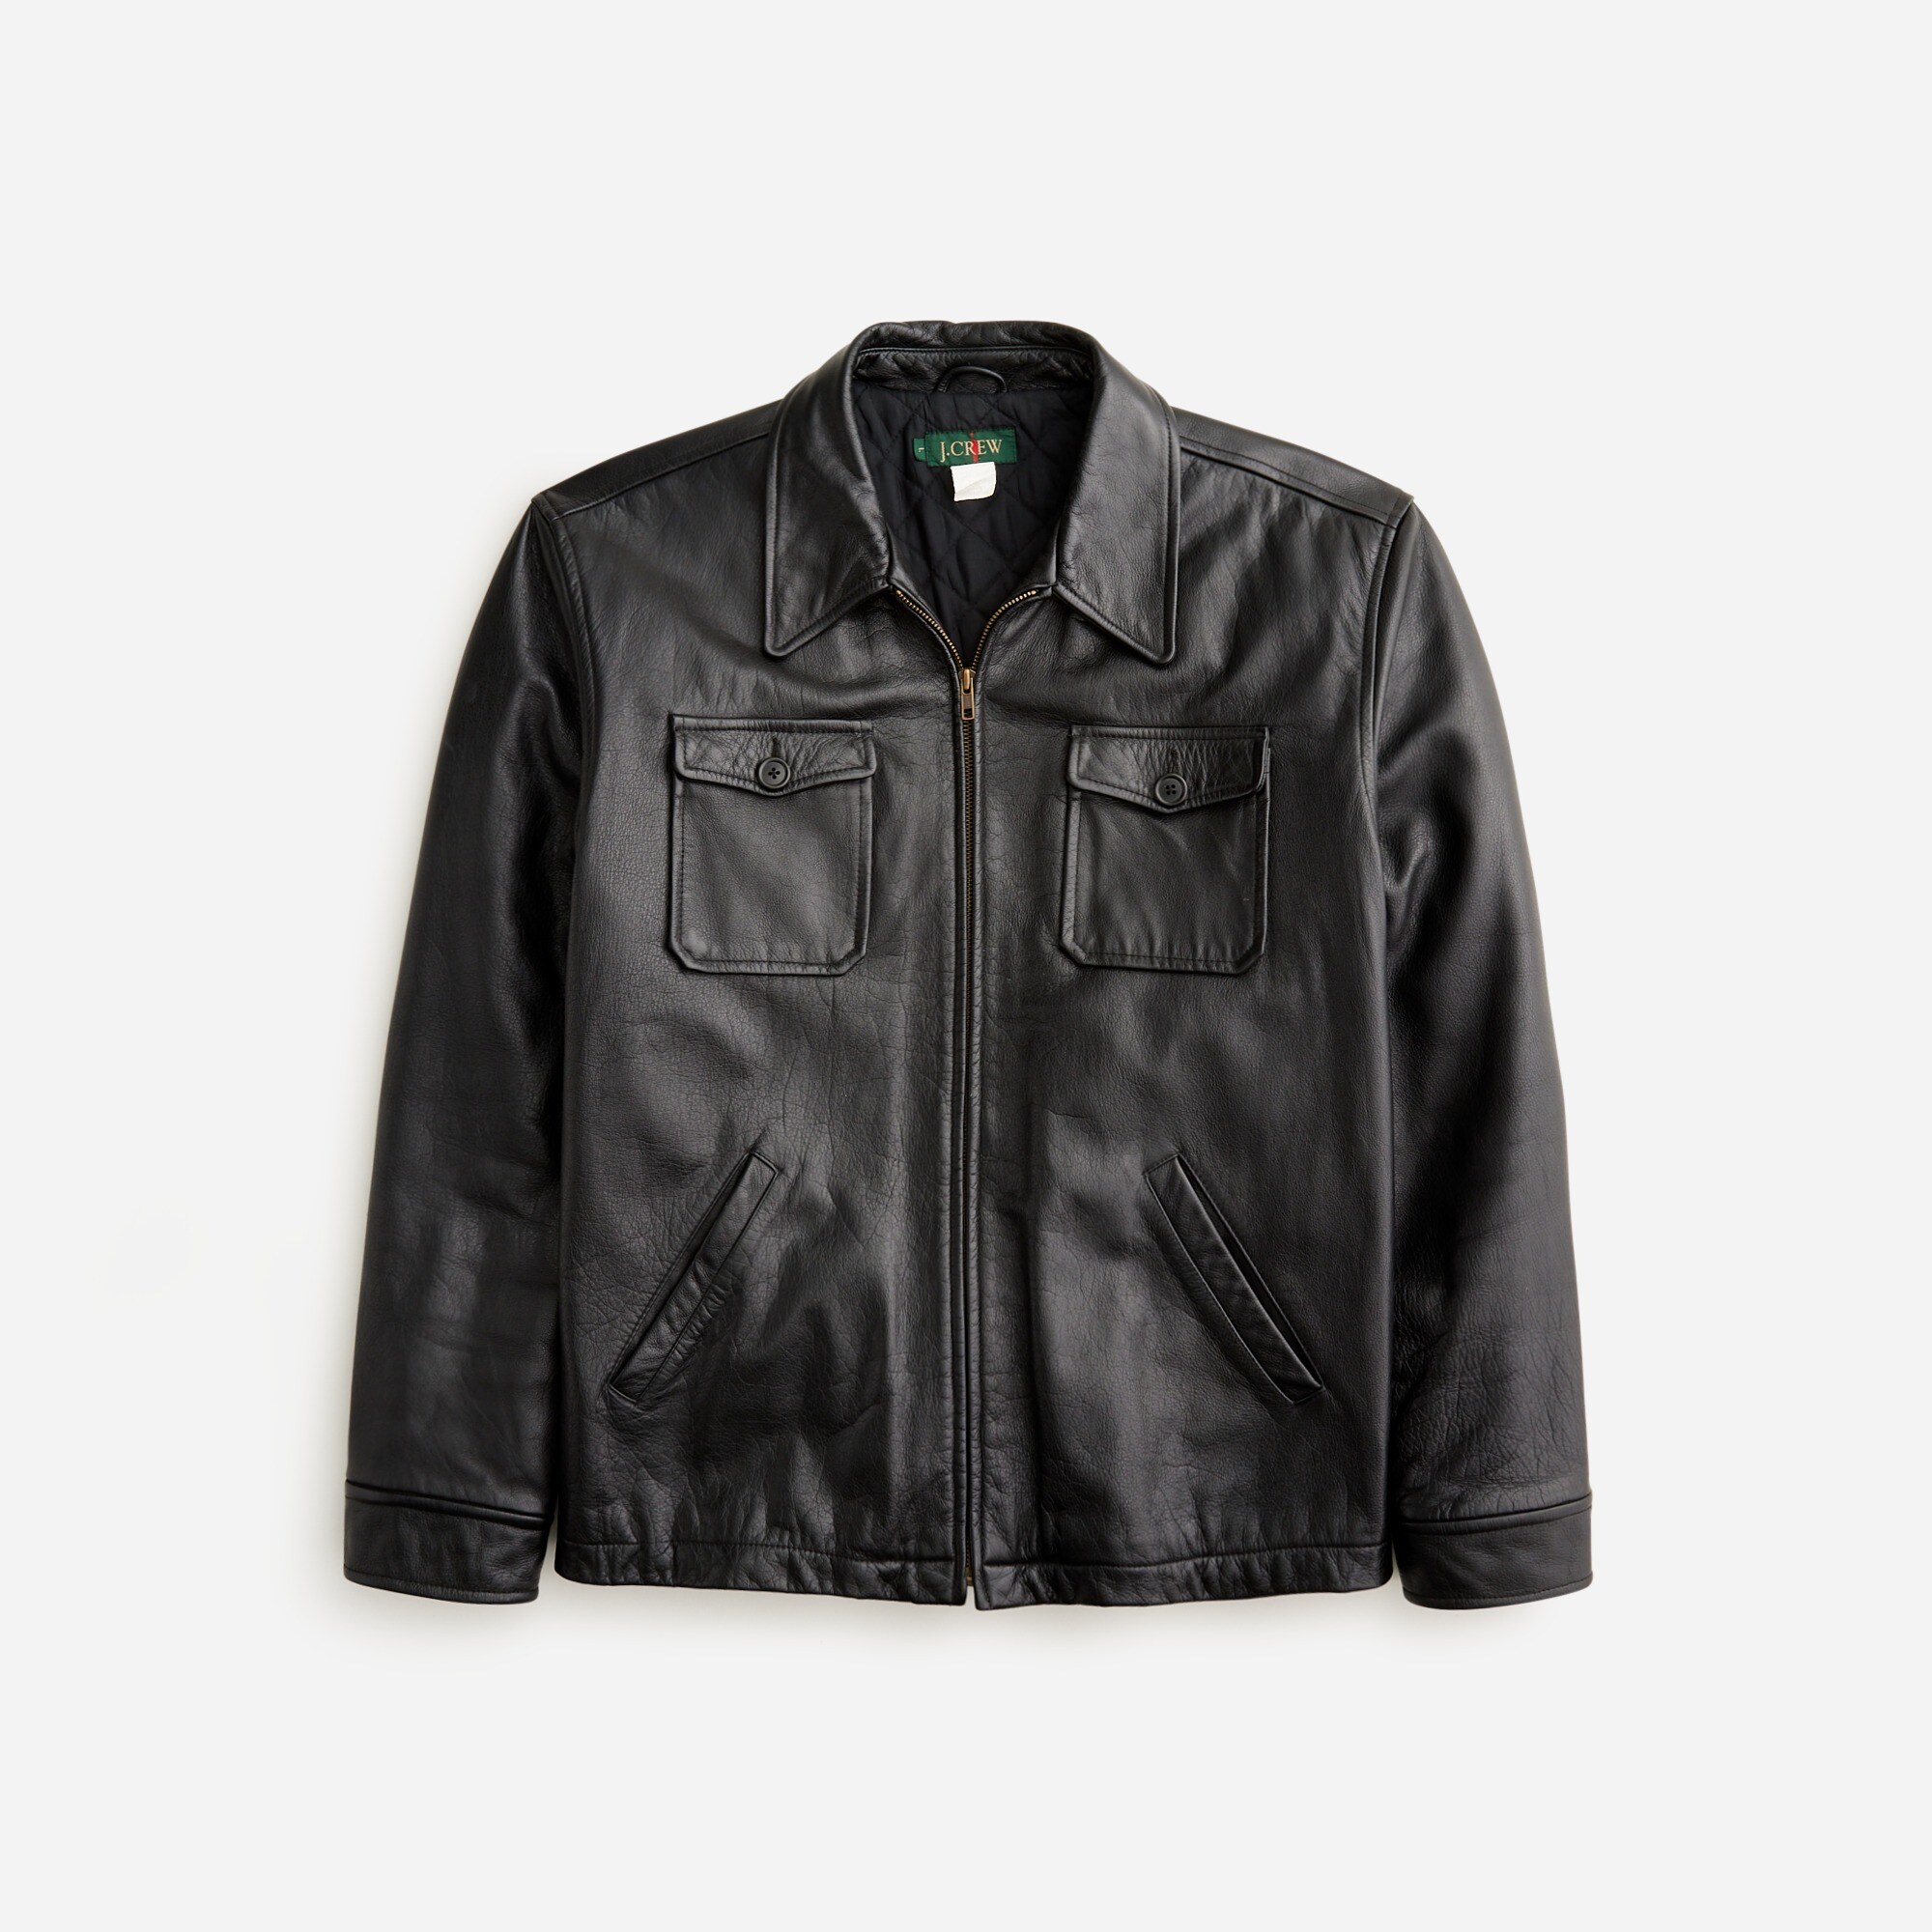  Vintage J.Crew '90s leather utility jacket